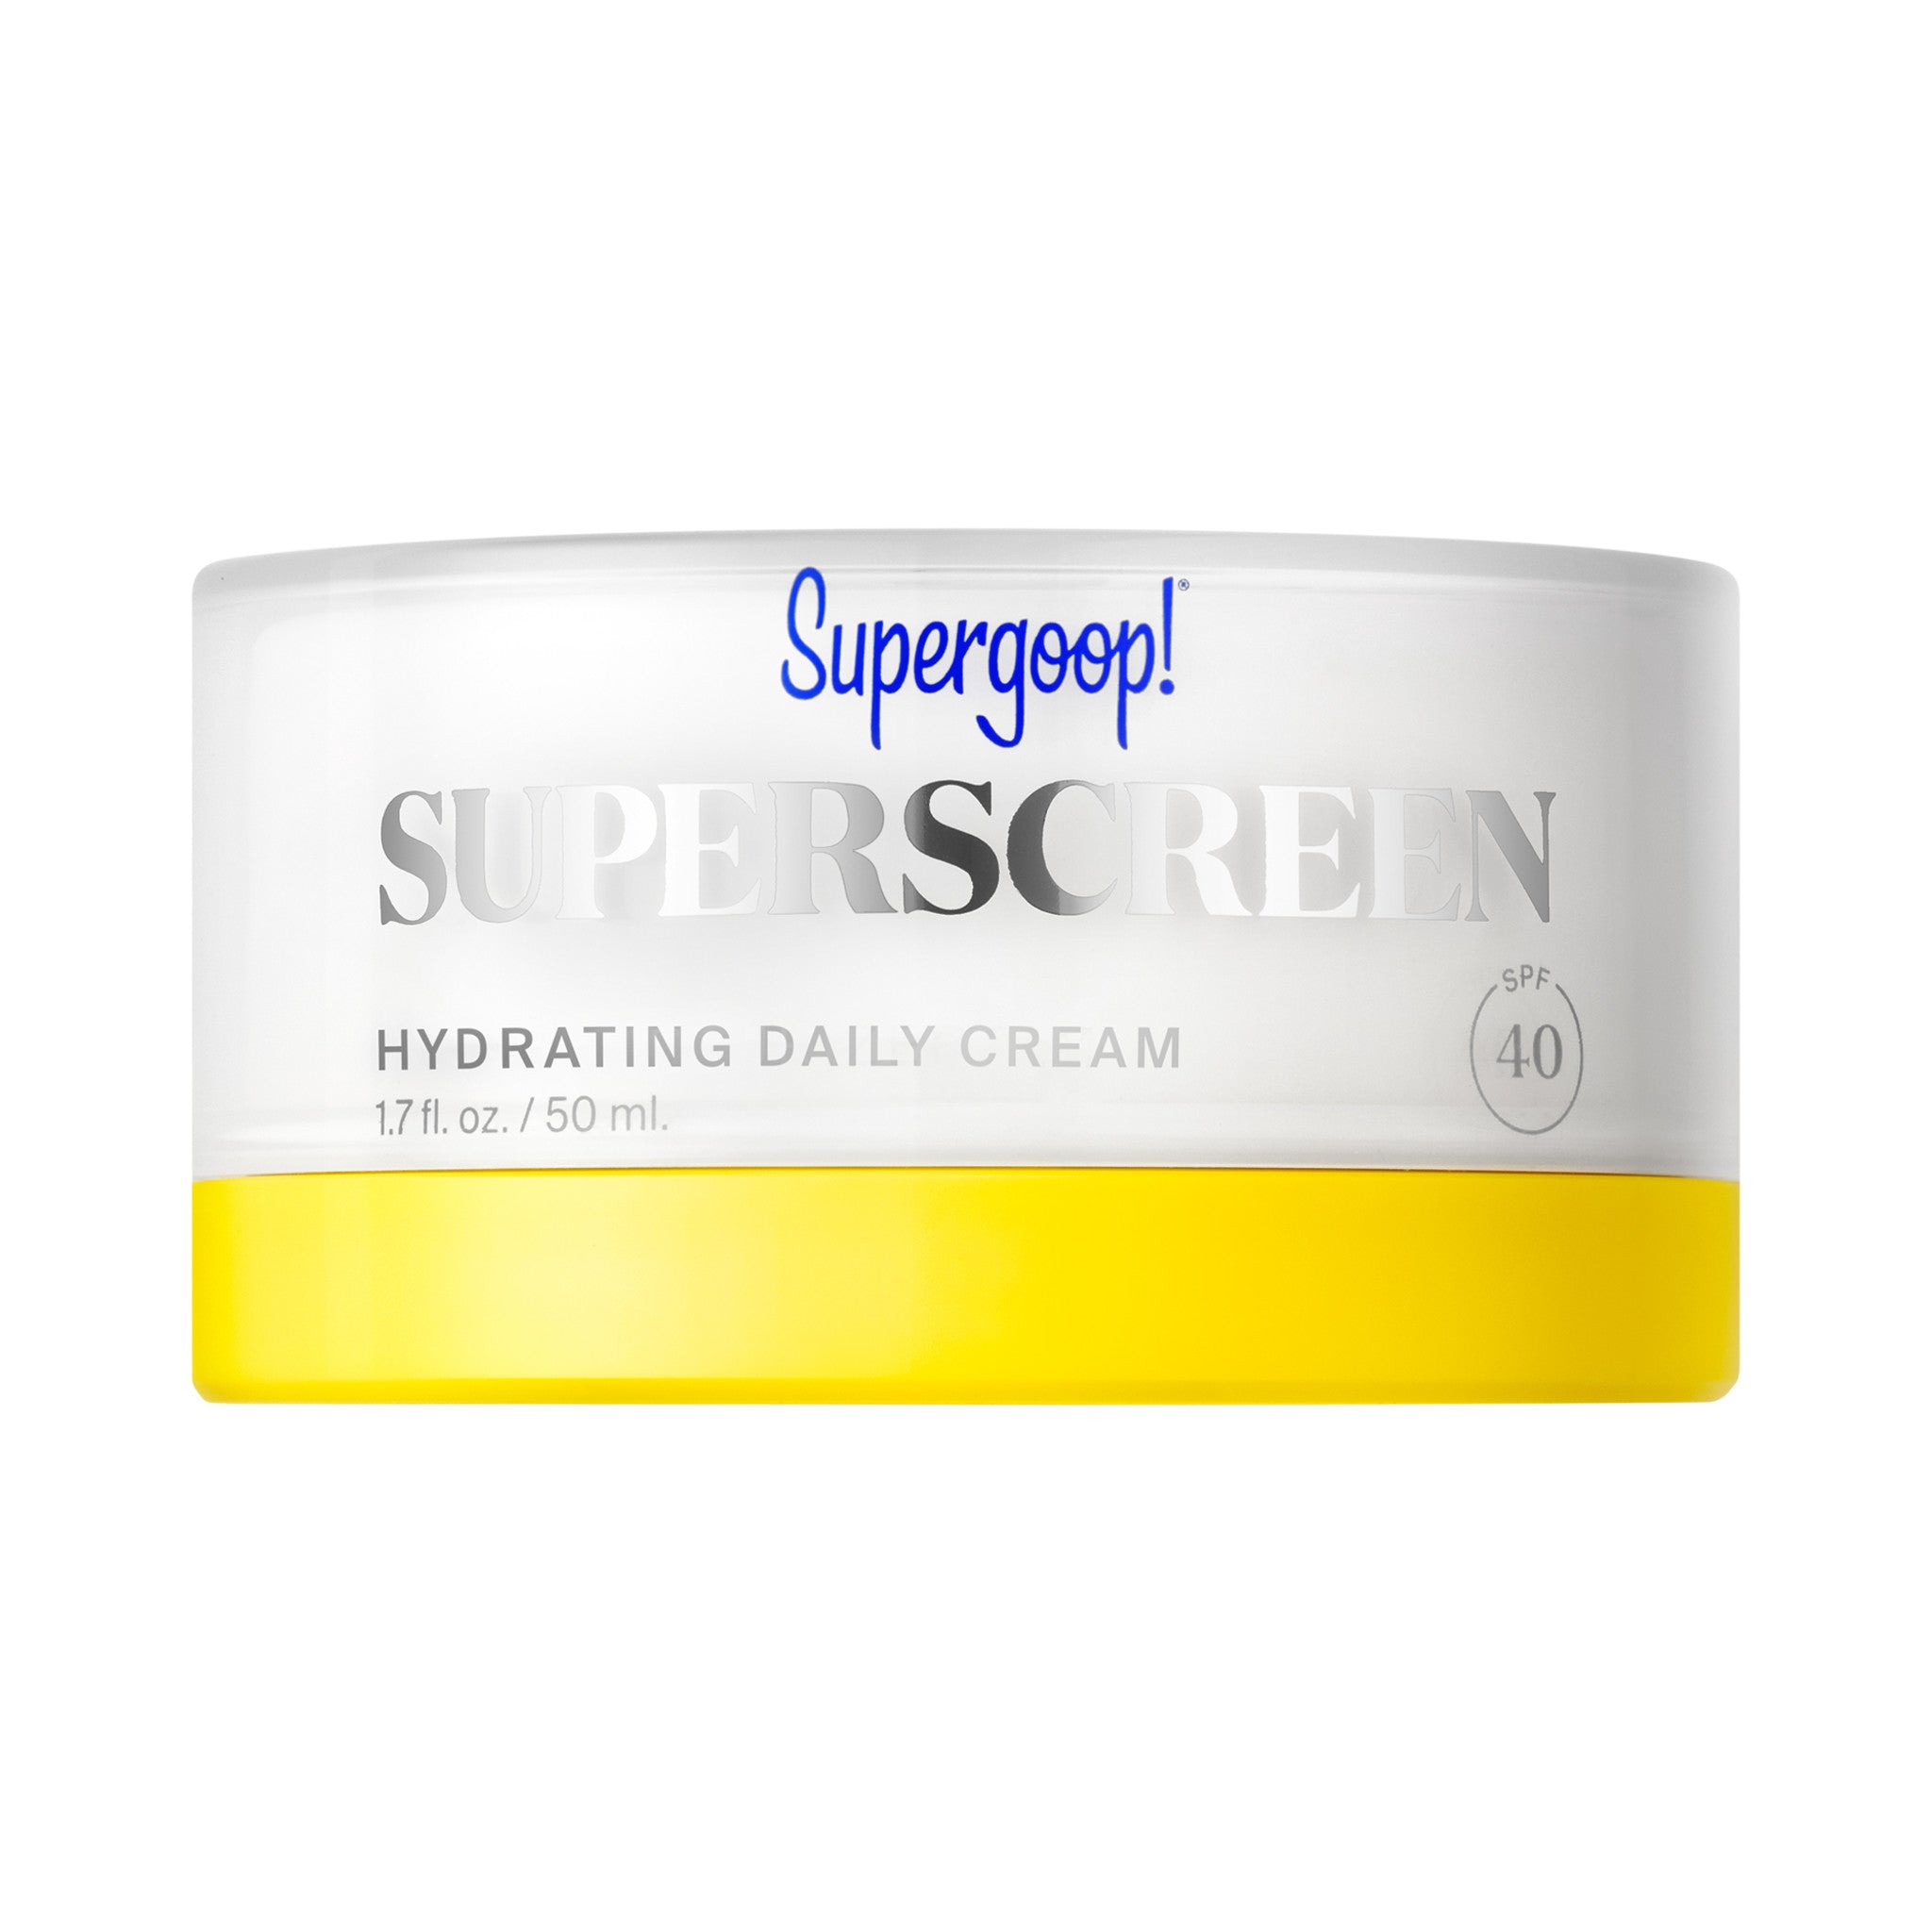 Supergoop! Superscreen Hydrating Daily Cream SPF 40 main image.